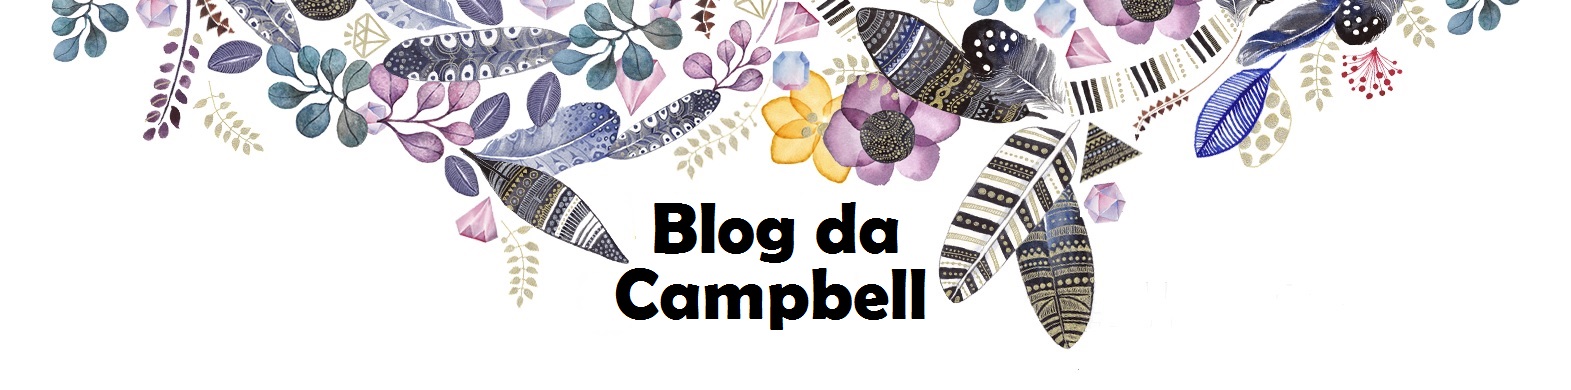 Blog da Campbell